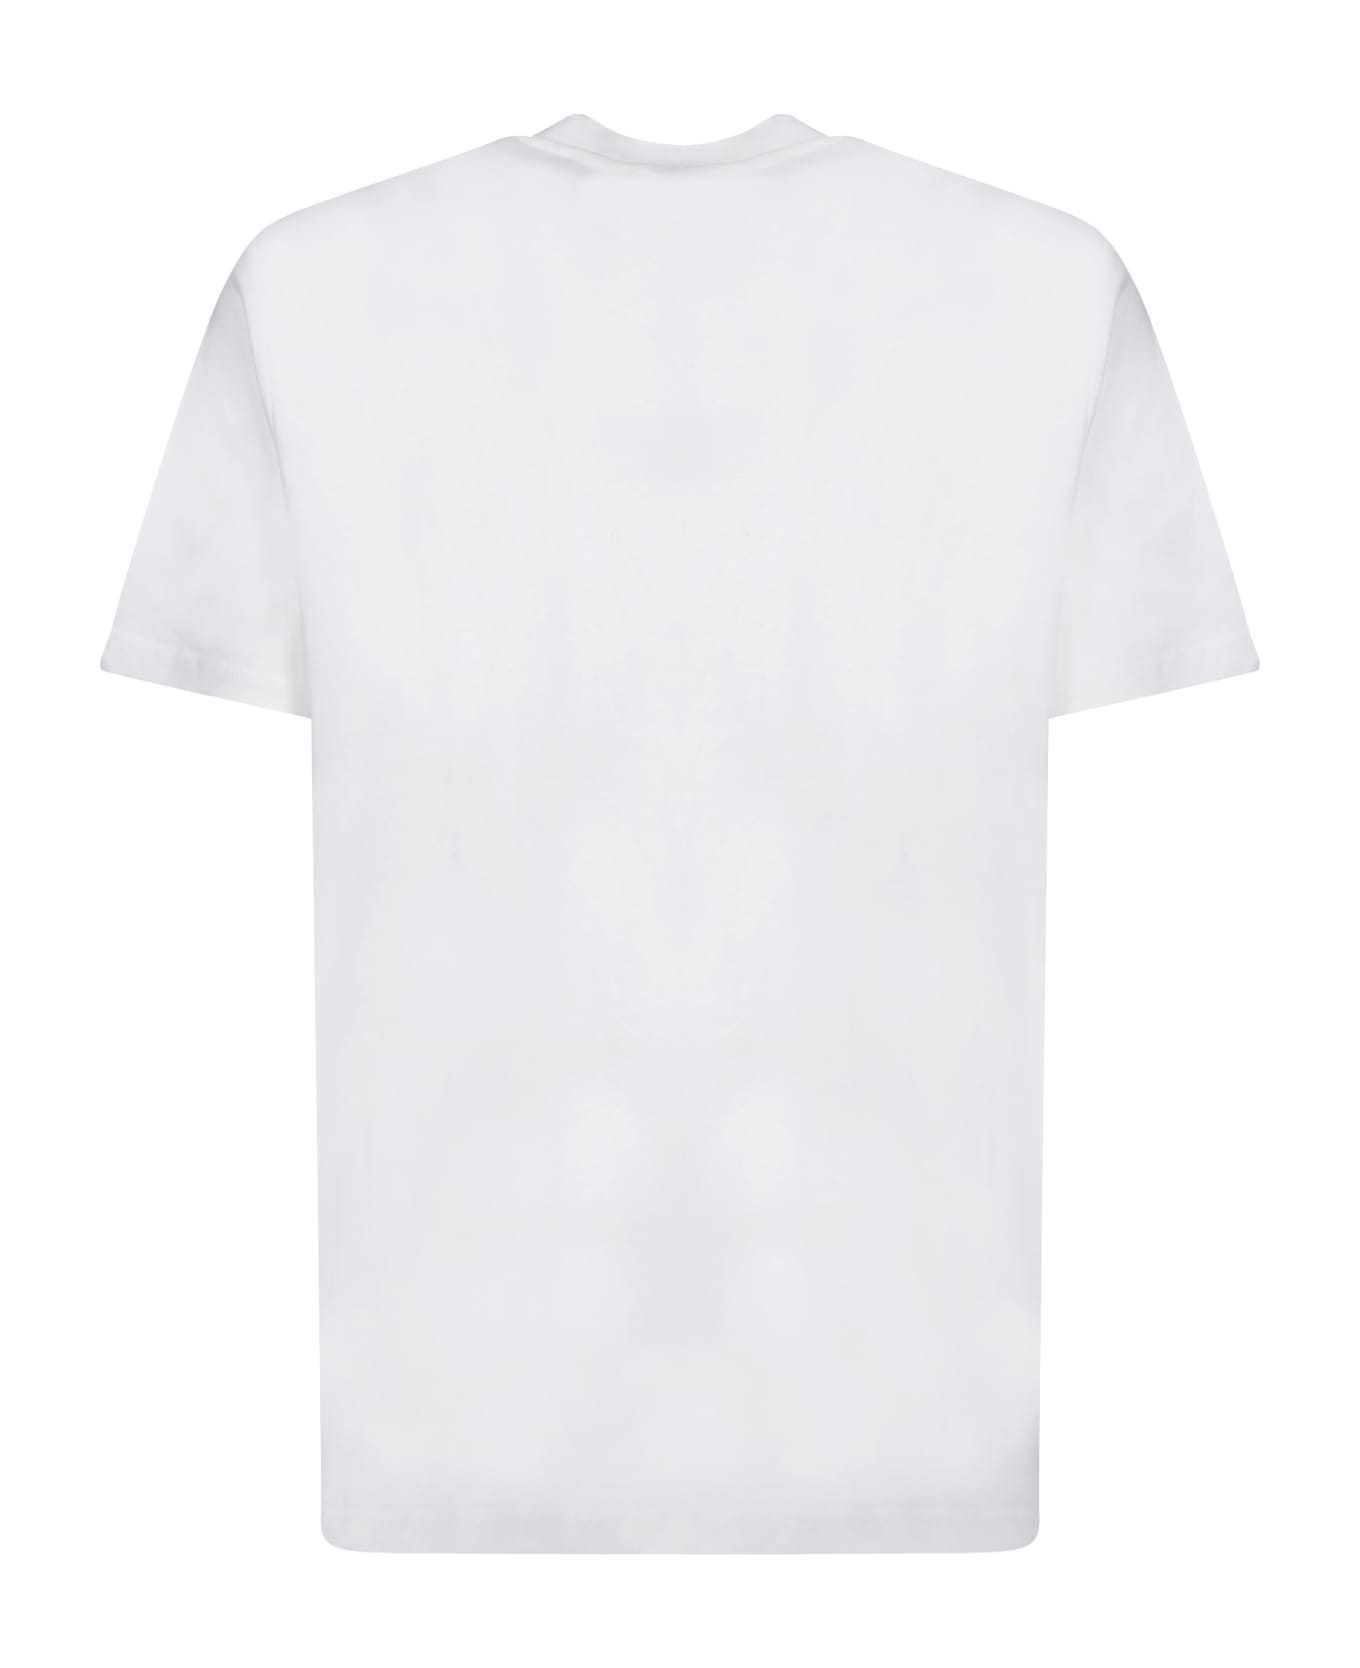 Diesel T-just-dobal-pj White T-shirt - White